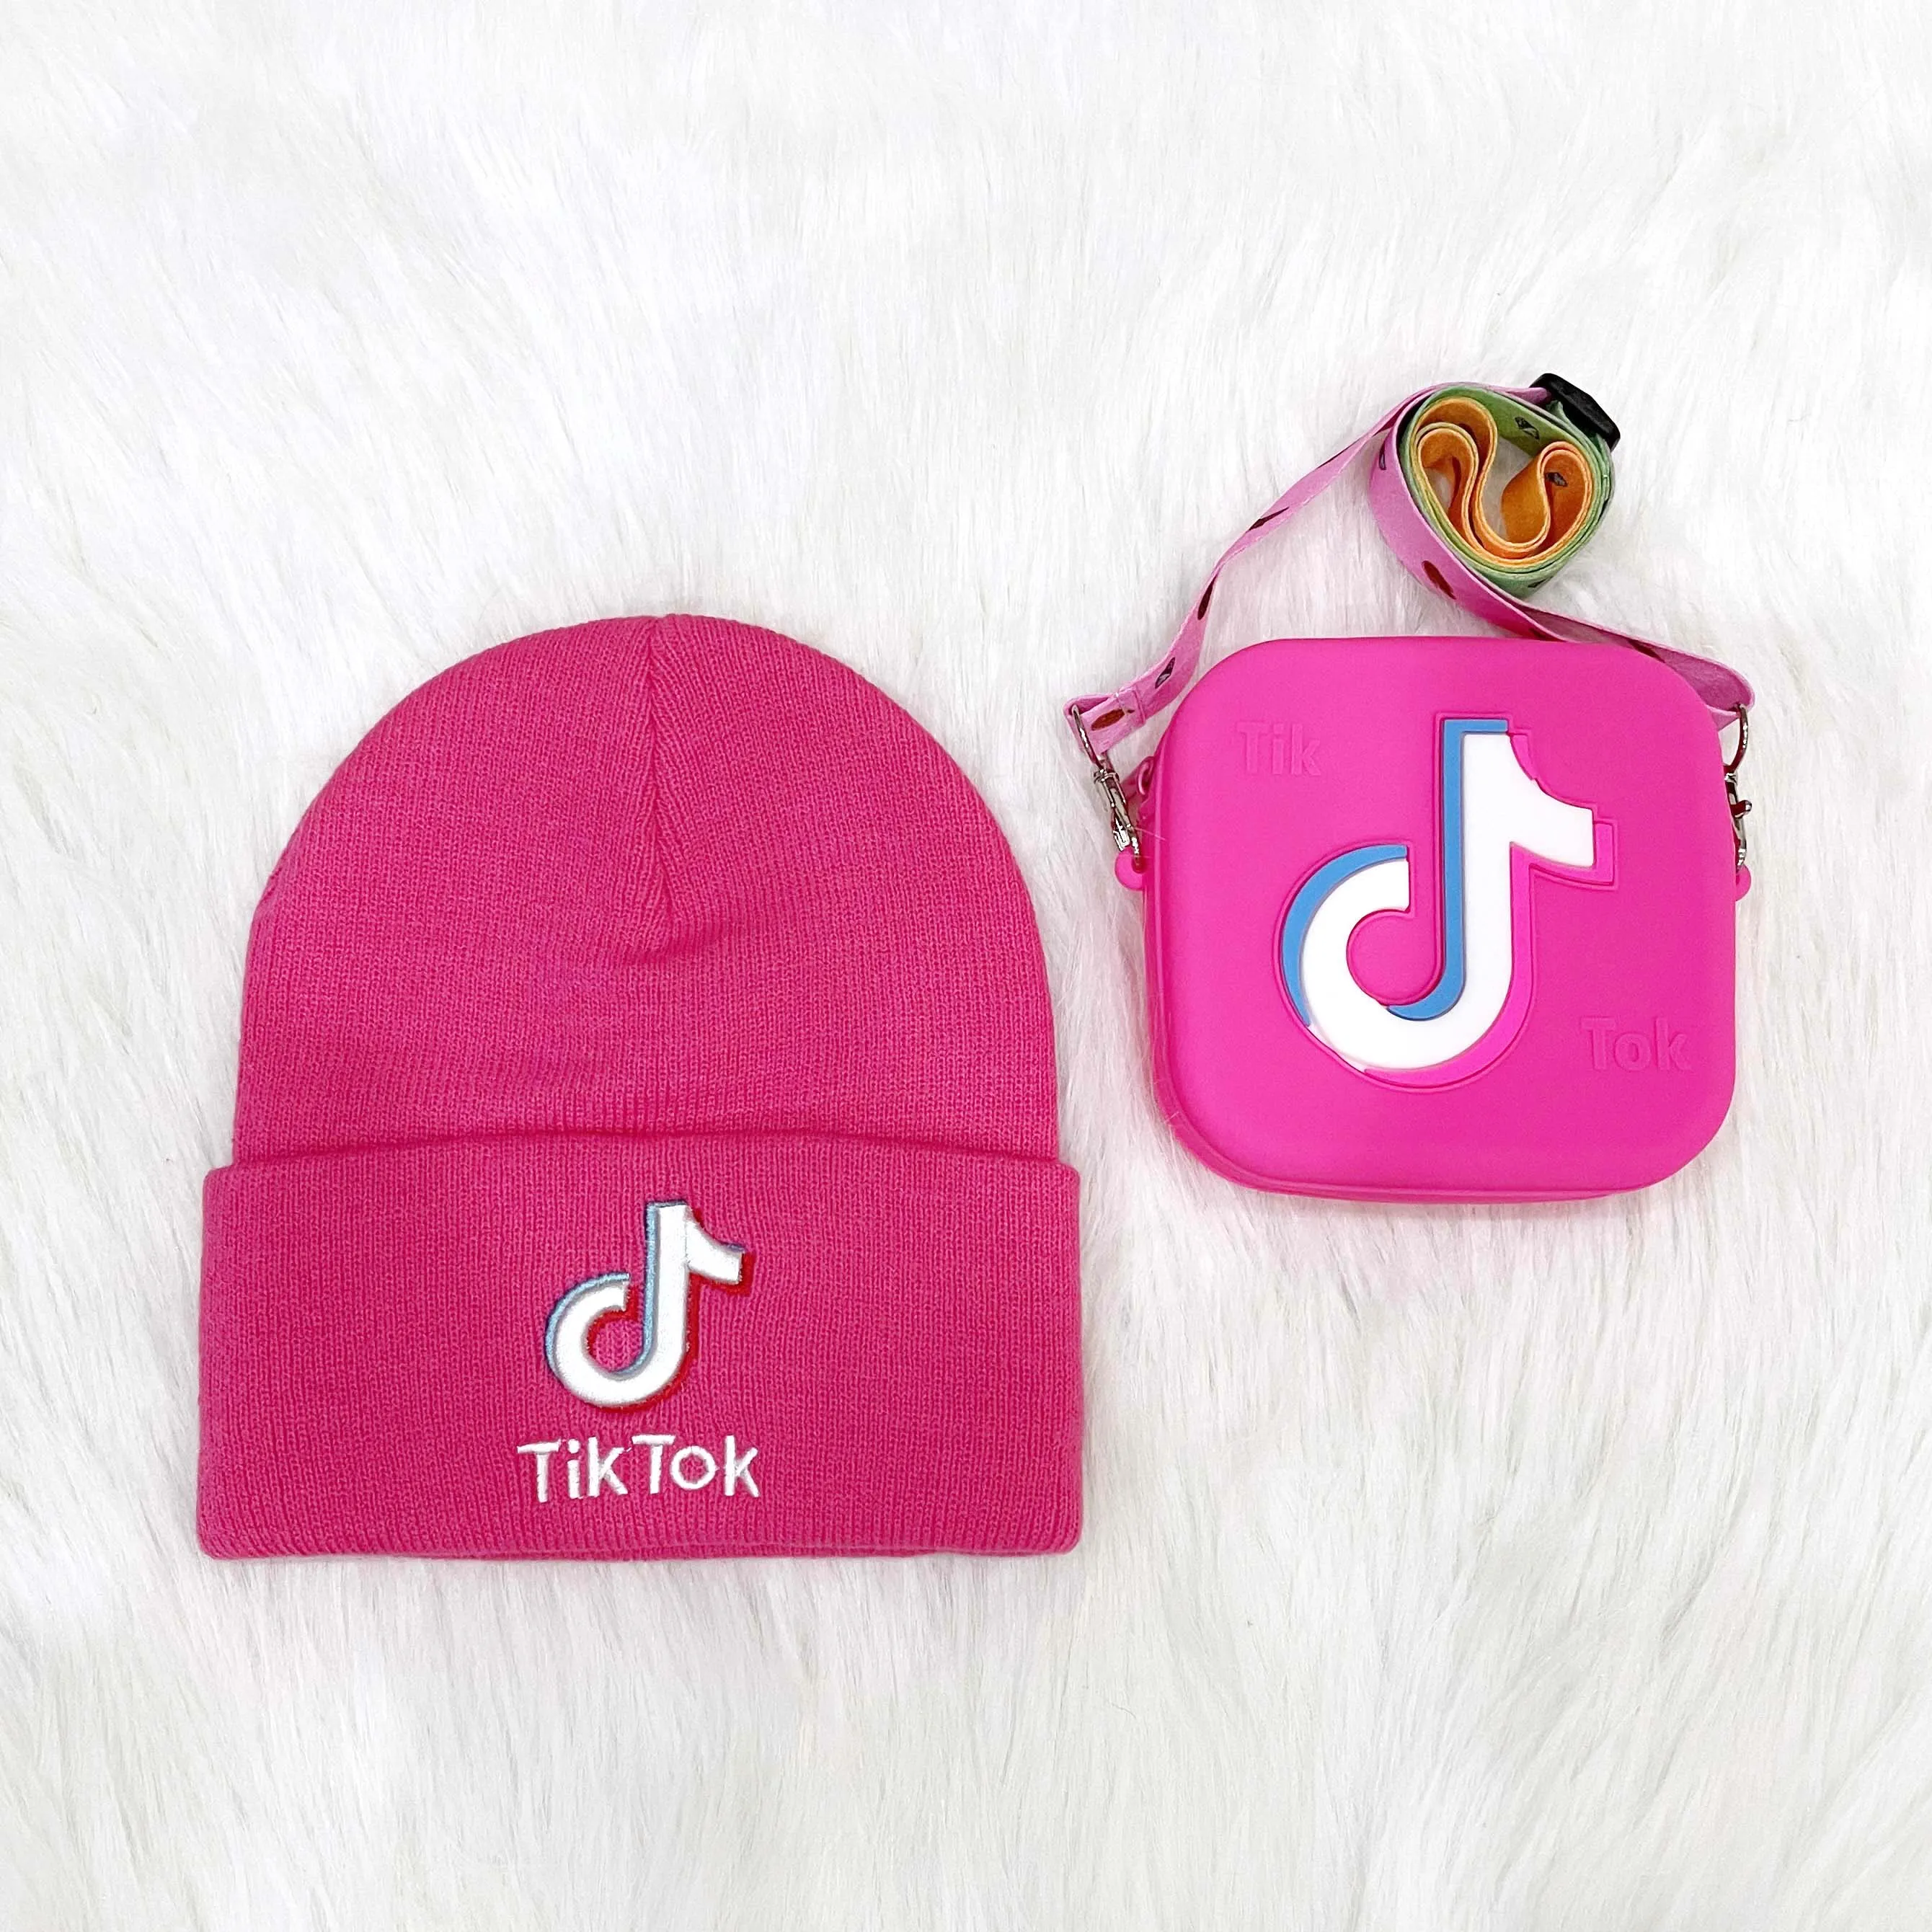 

Hot Sale Famous Designer Brands Handbags Matching Winter Hats Tik Tok Women Hand Bags Purses And Hats Set